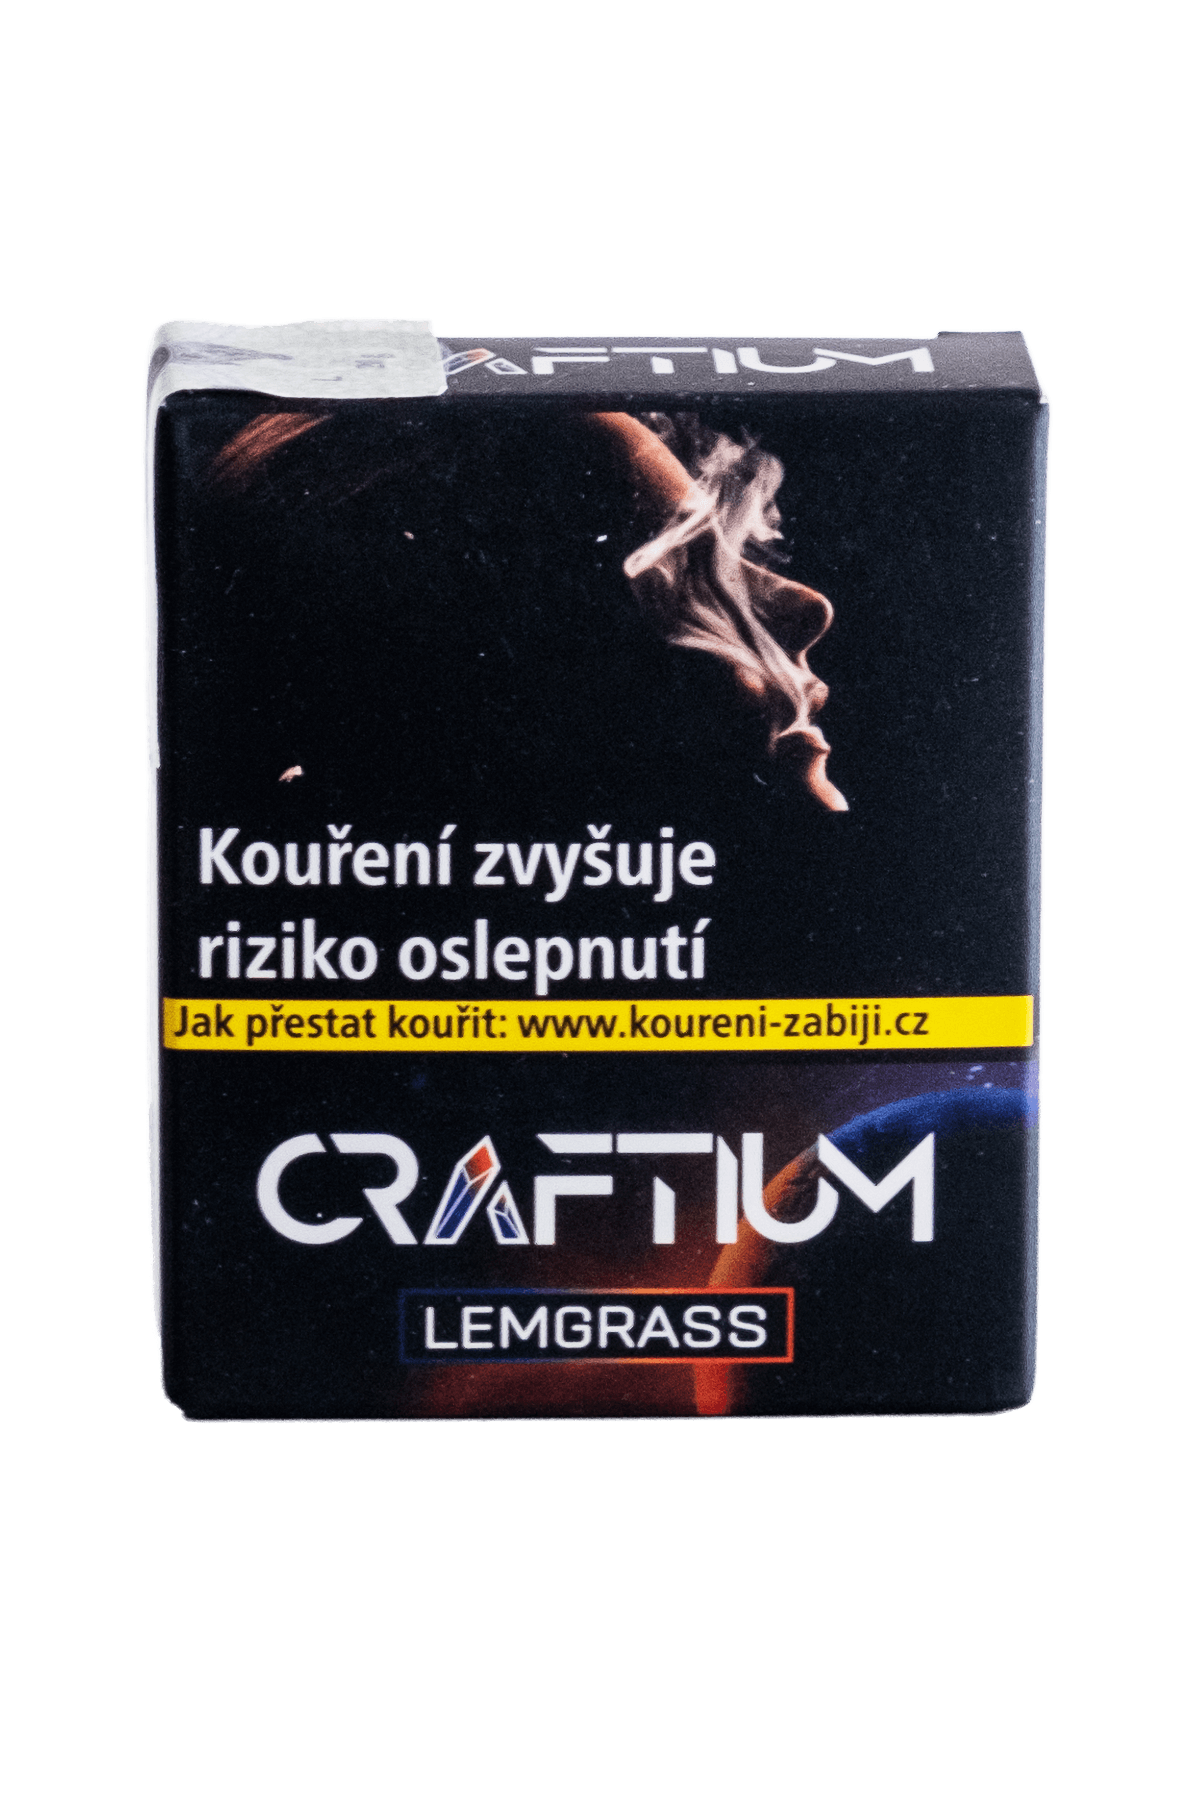 Tabák - Craftium 20g - Lemgrass